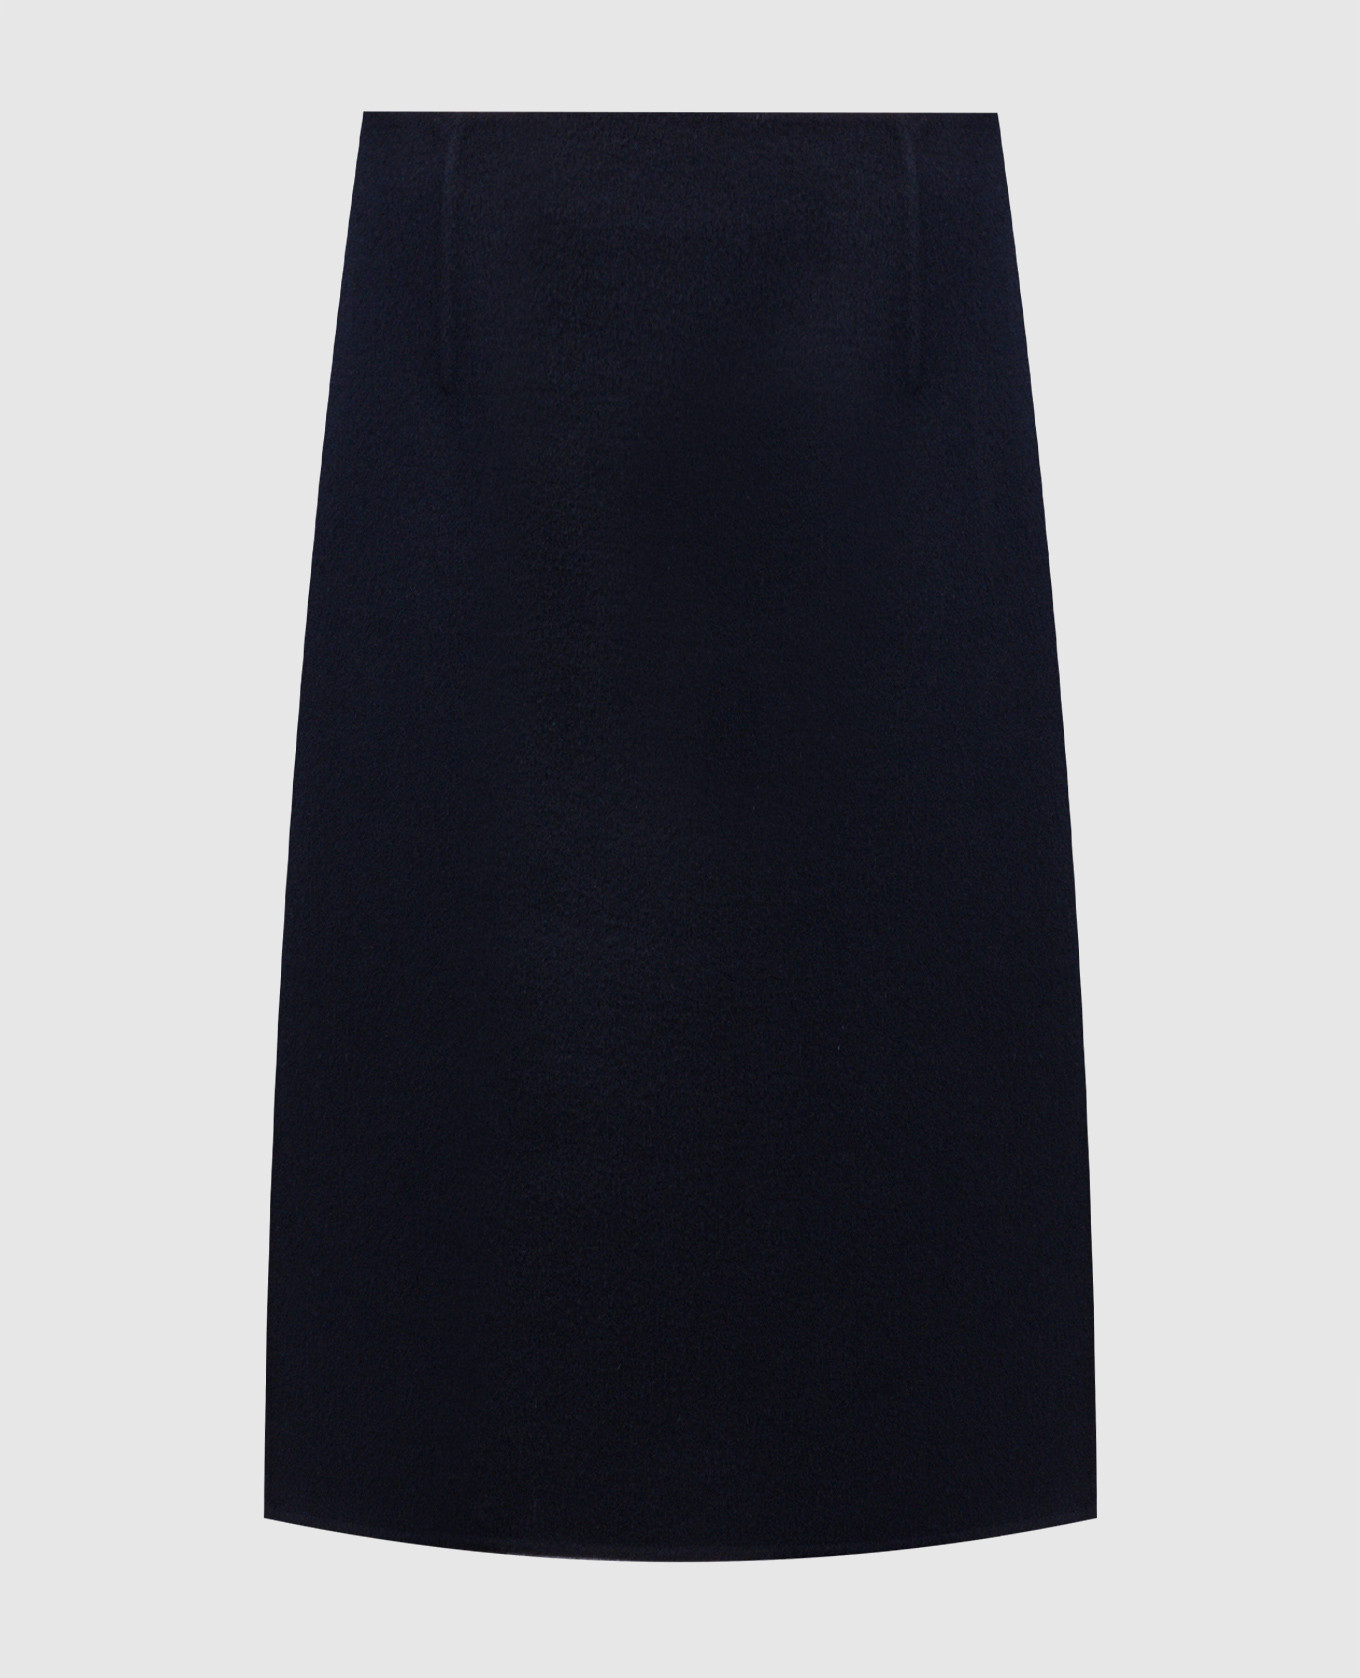 Blue midi skirt made of wool